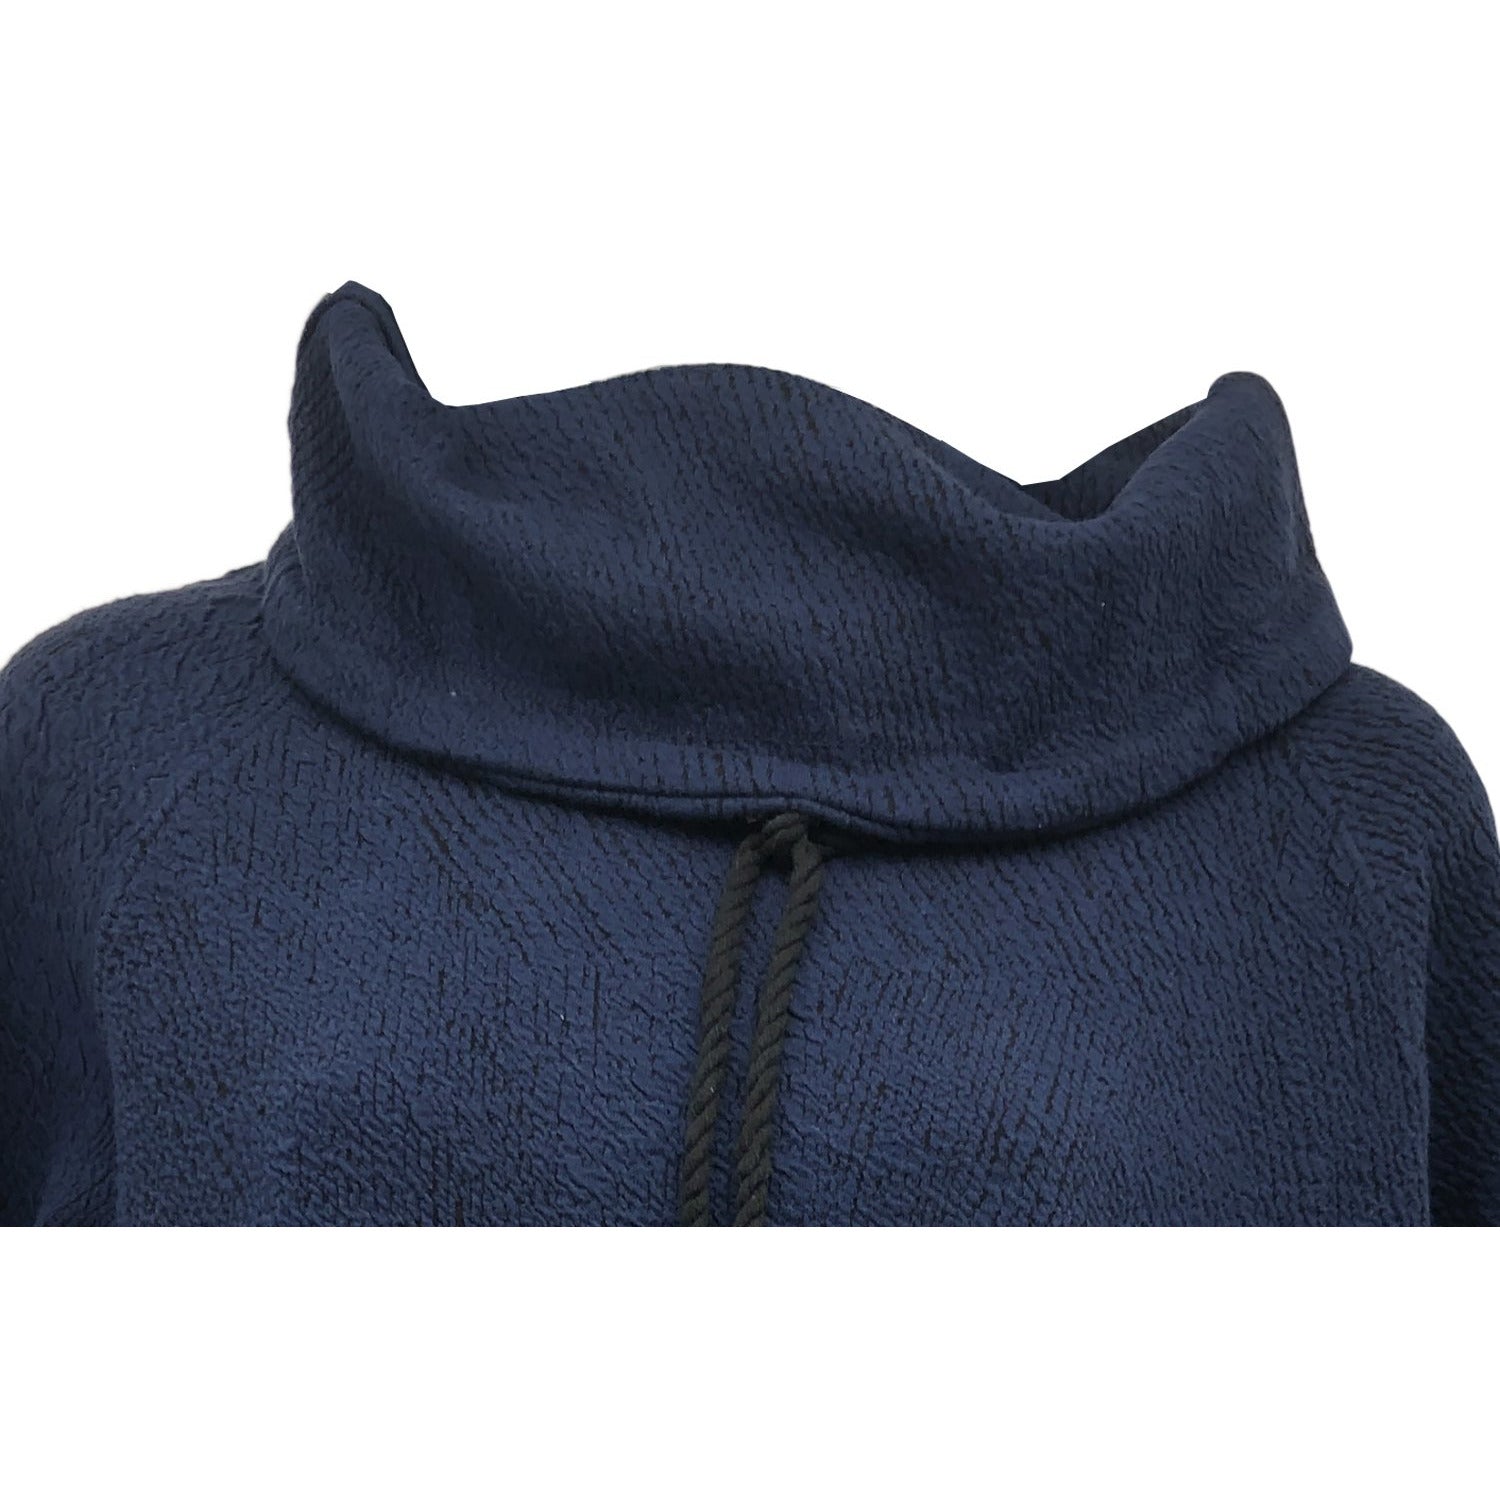 Kirkland Women's Pullover Sweater / Navy Blue / Cowl Neck / Size Small